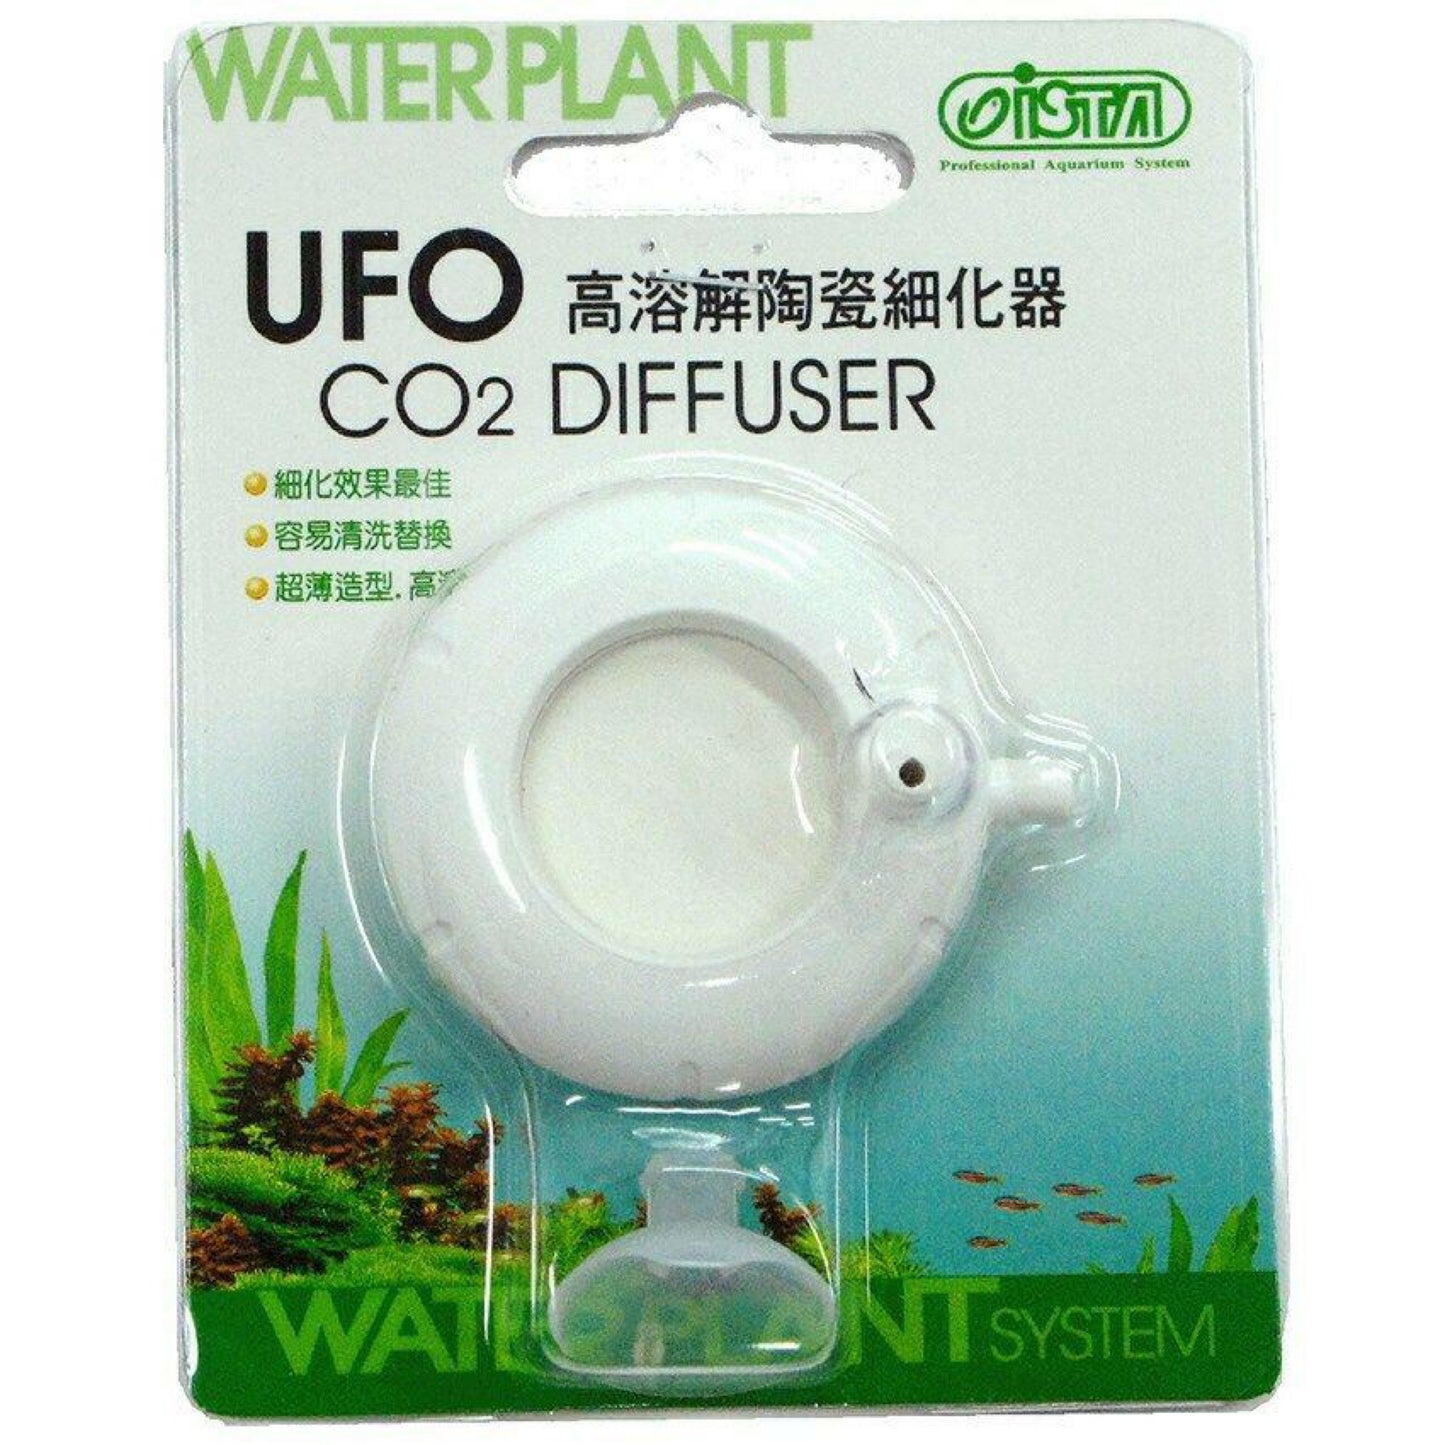 Ista Waterplant UFO Ceramic Co2 Diffuser Large Planted Freshwater Aquariums Tank